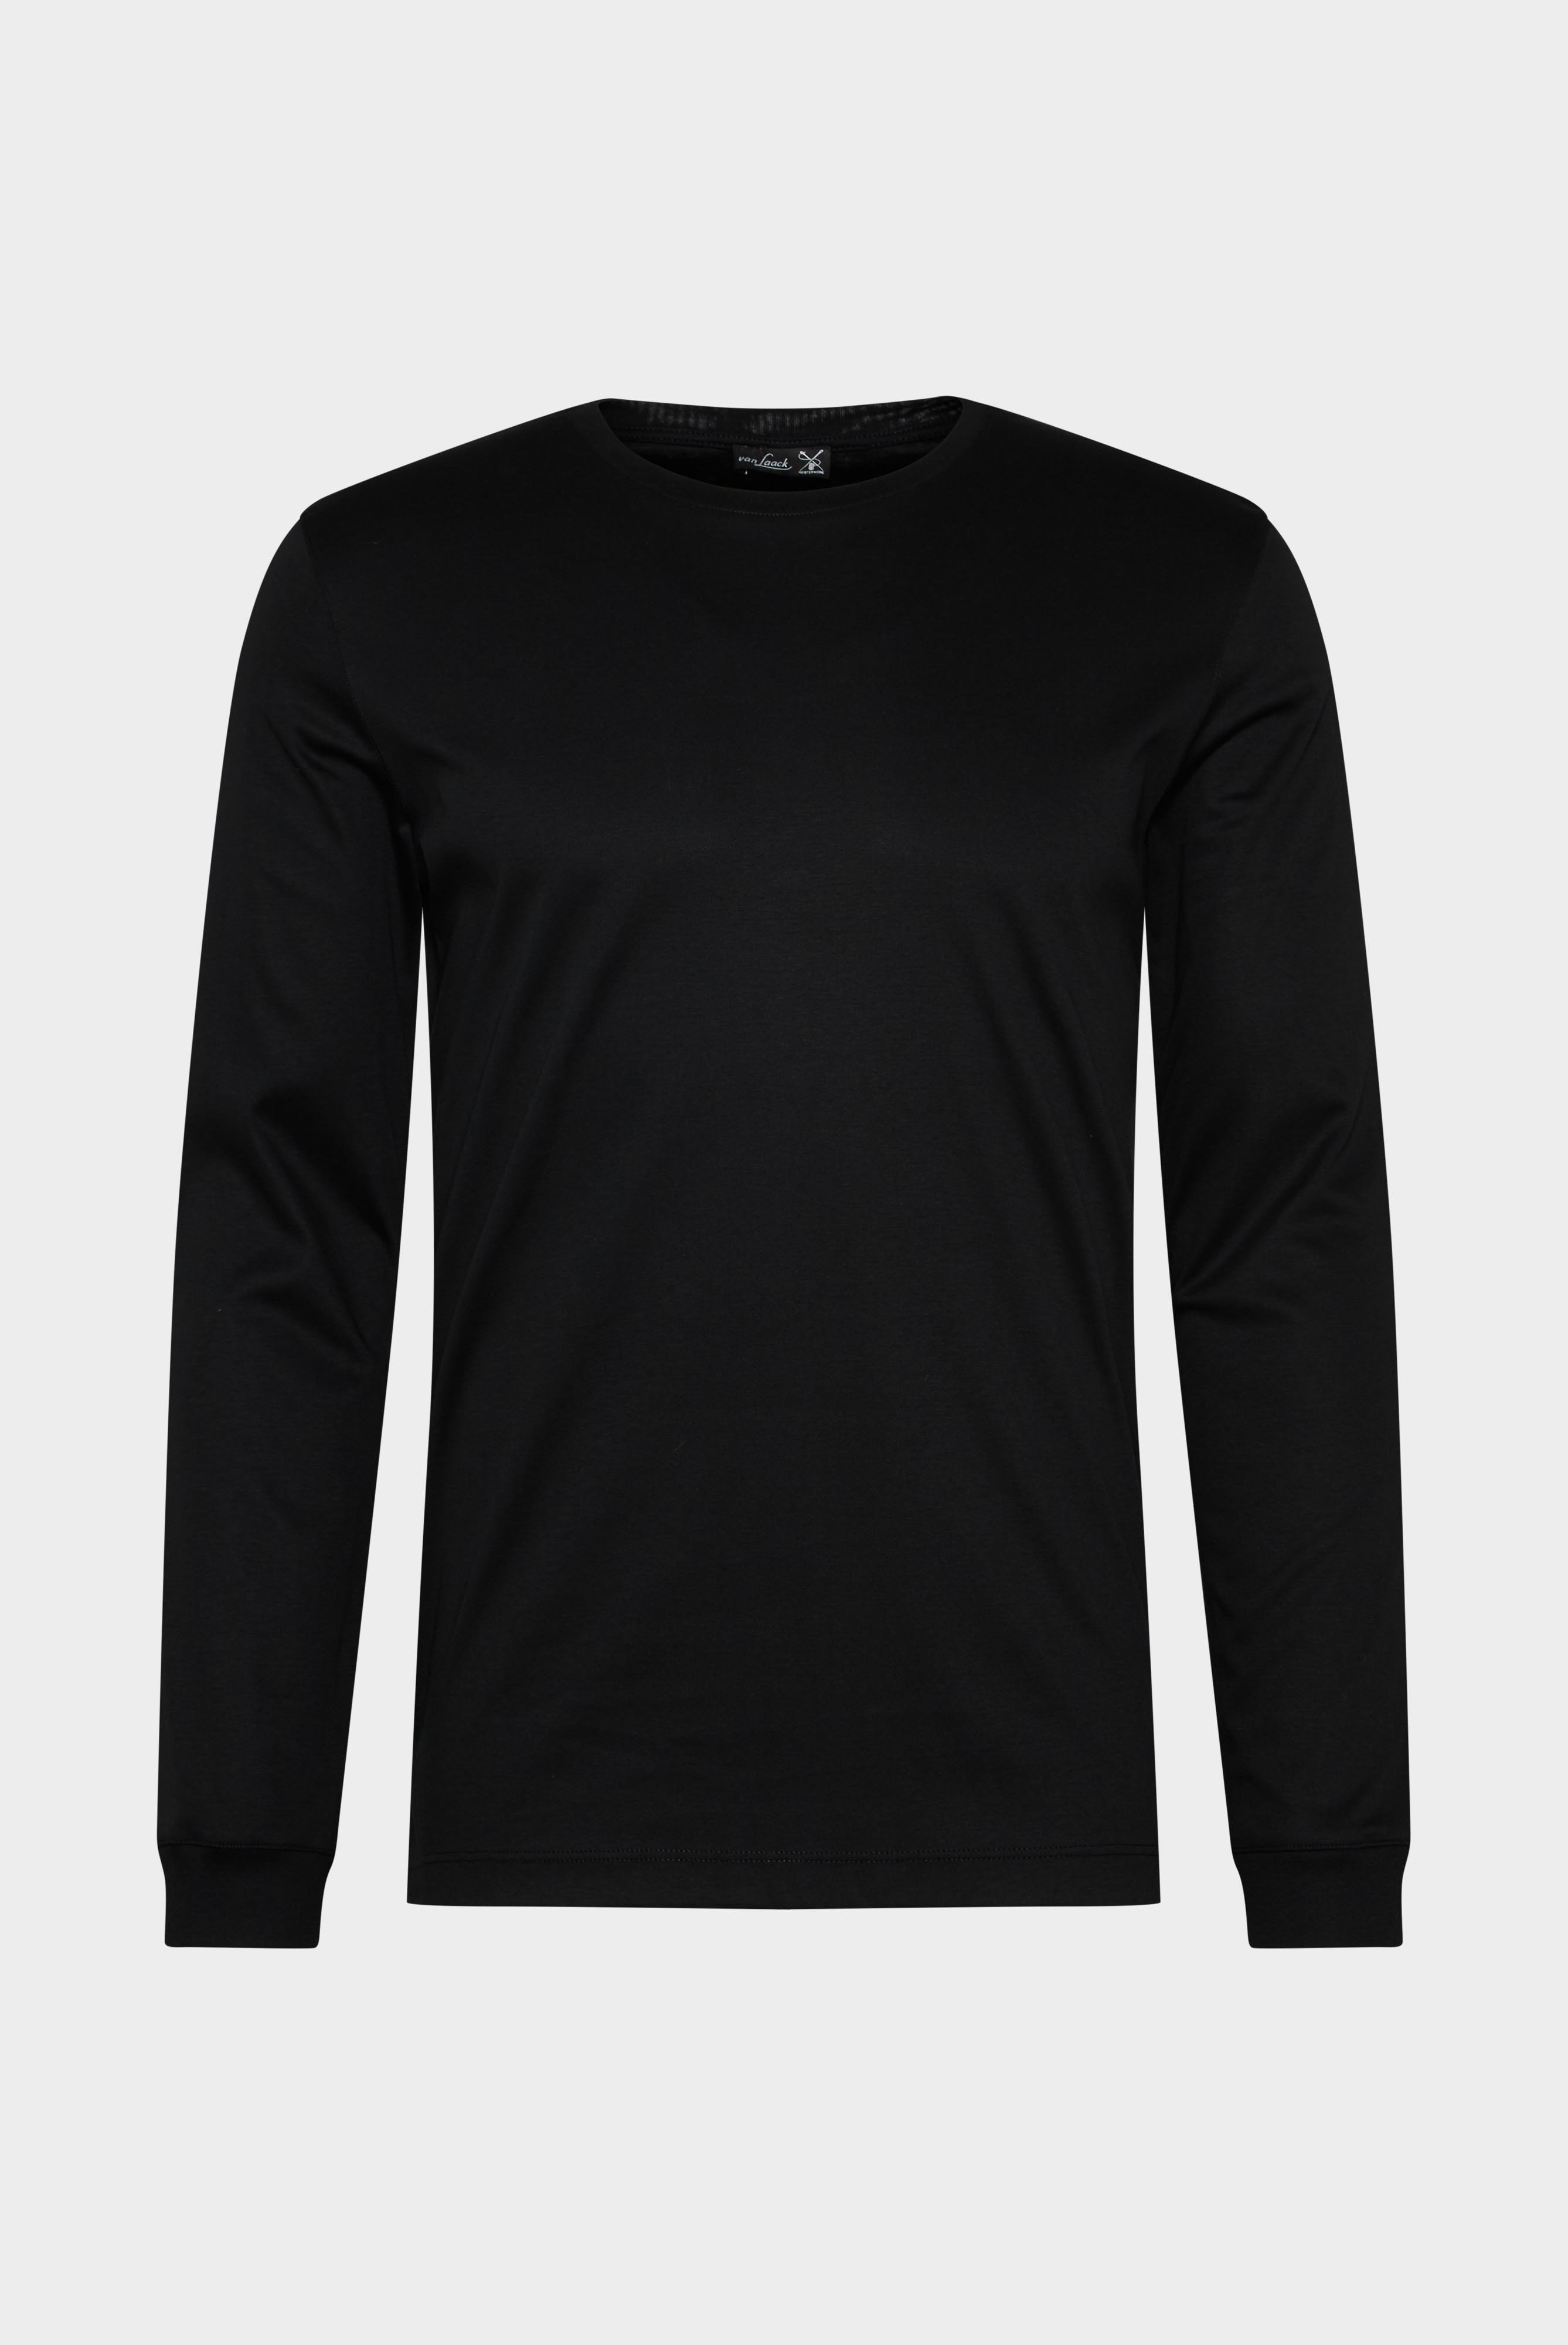 T-Shirts+Langarm Jersey T-Shirt mit Rundhals Slim Fit+20.1718.UX.180031.099.M